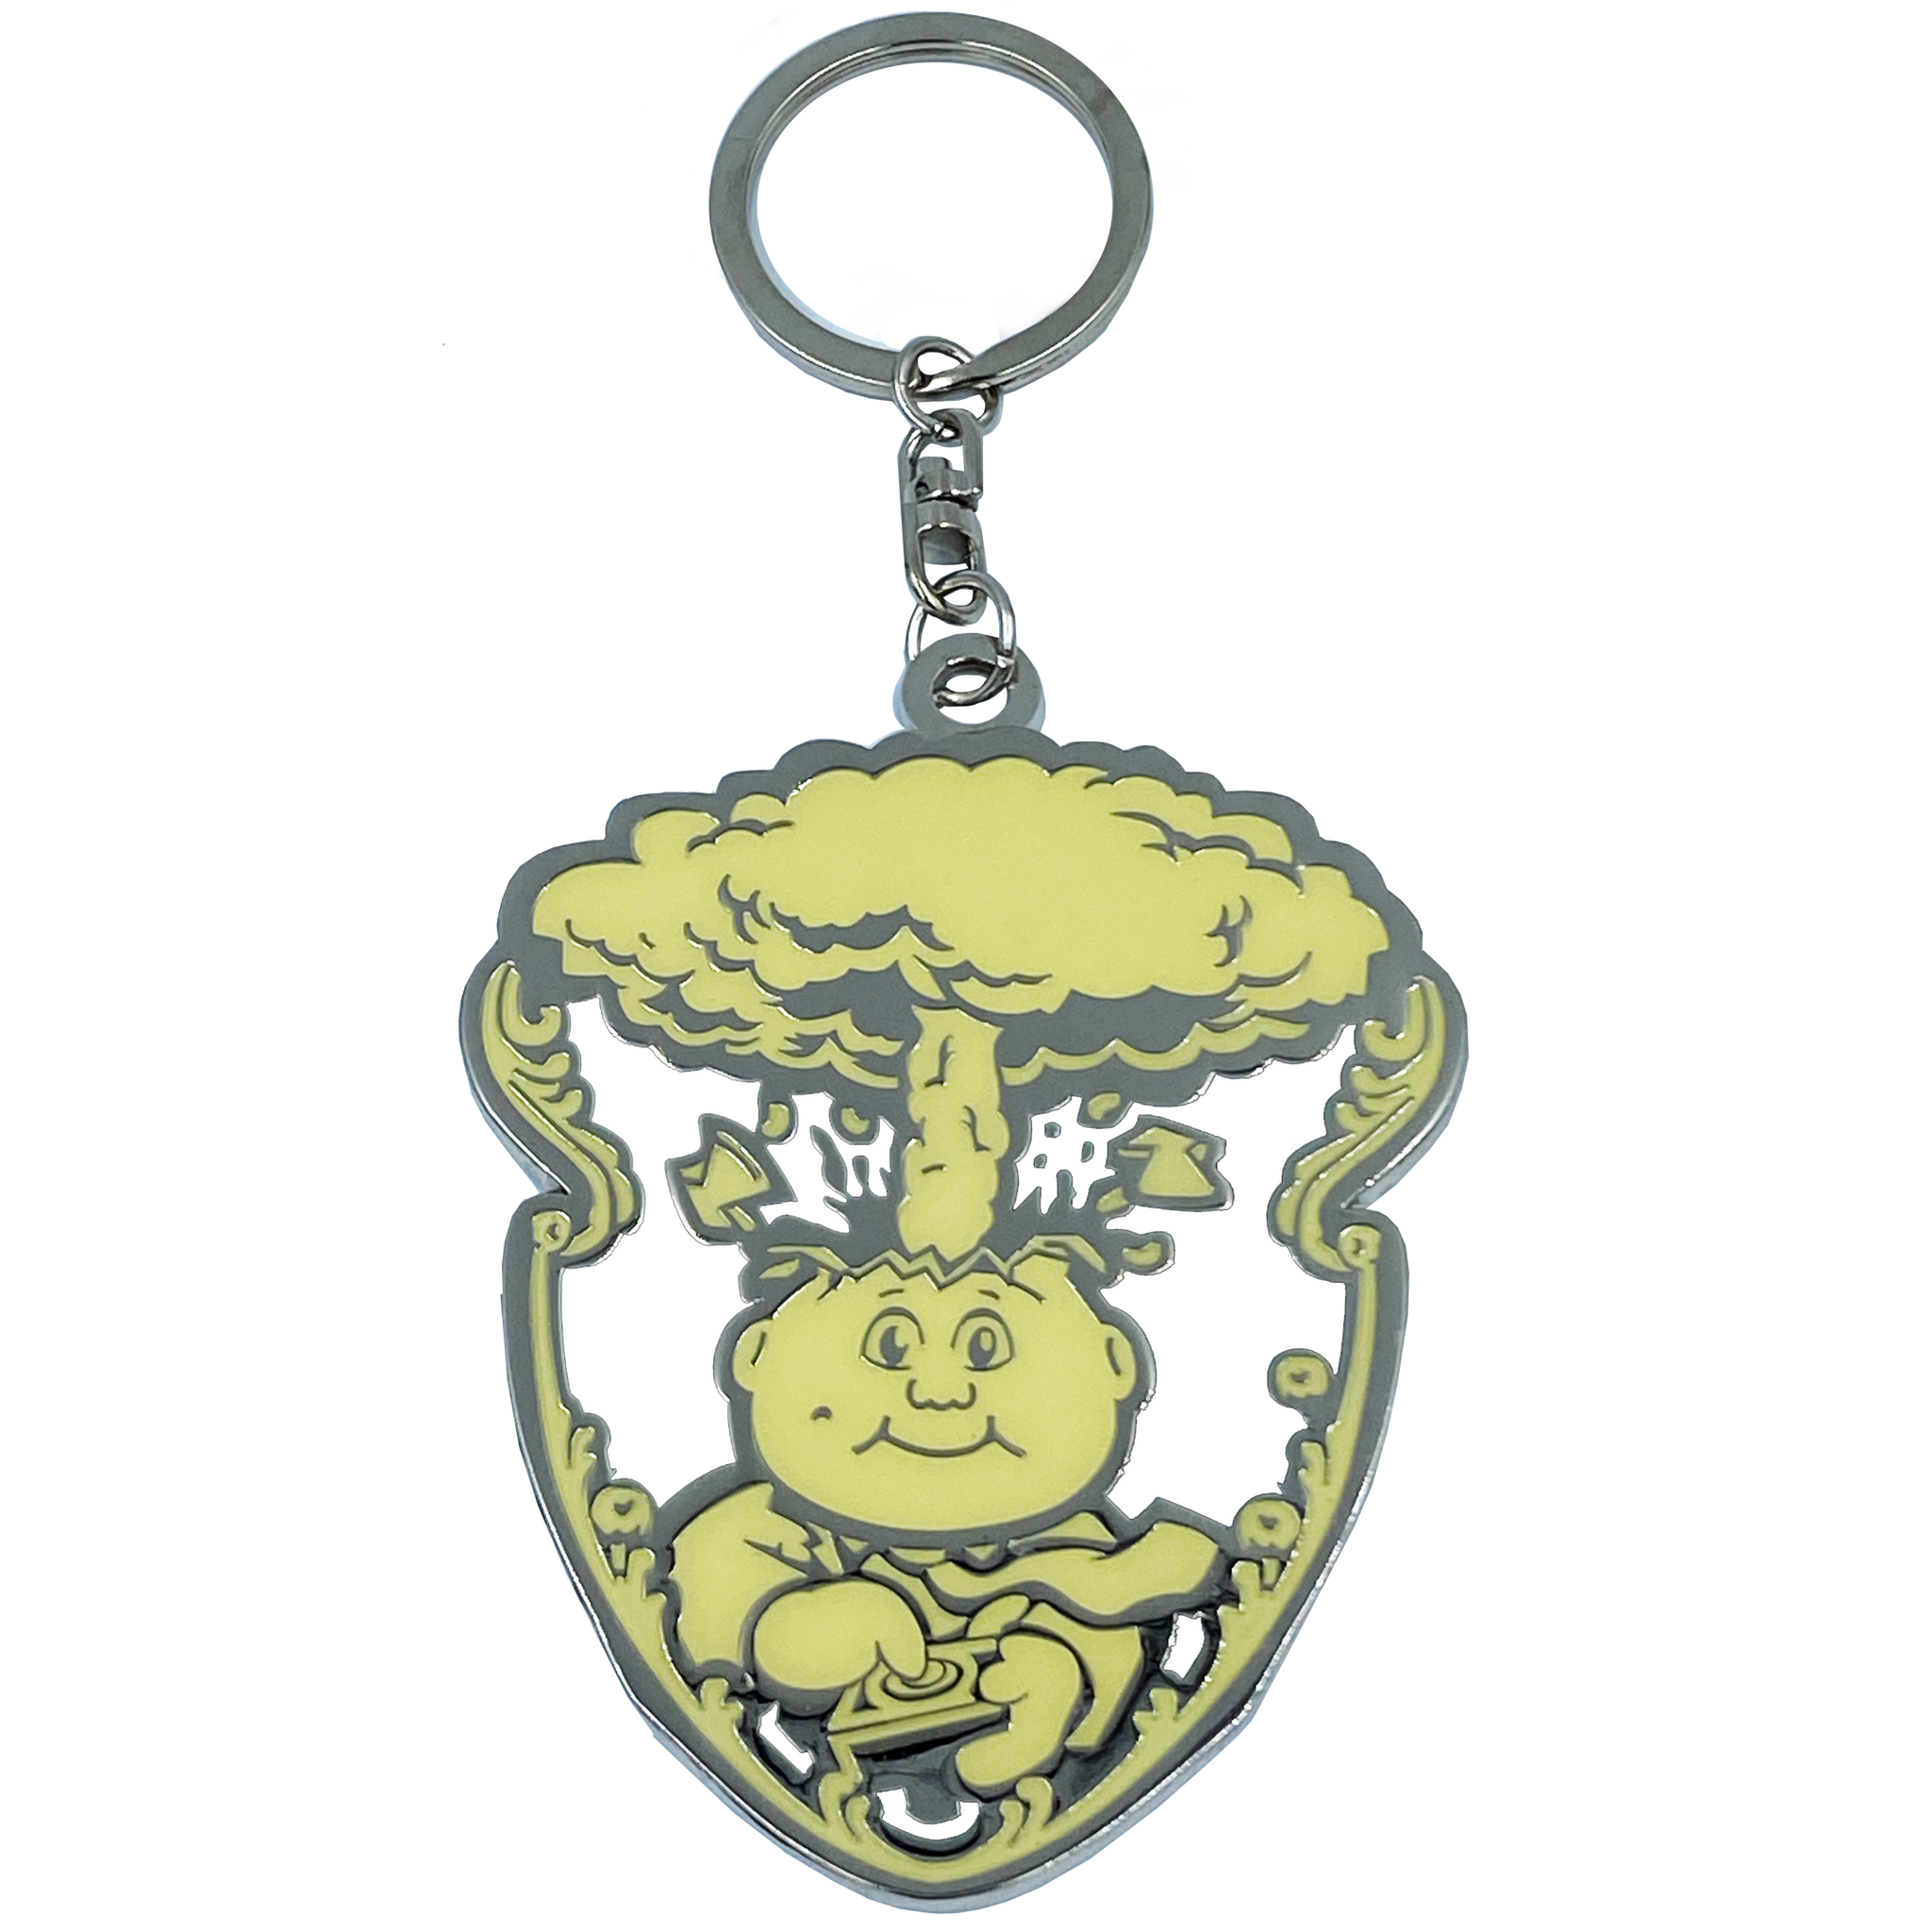 GPK-CC-006 WHITE Adam Bomb GPK Cloisonné Ornament Emblem Keychain: only 50 made